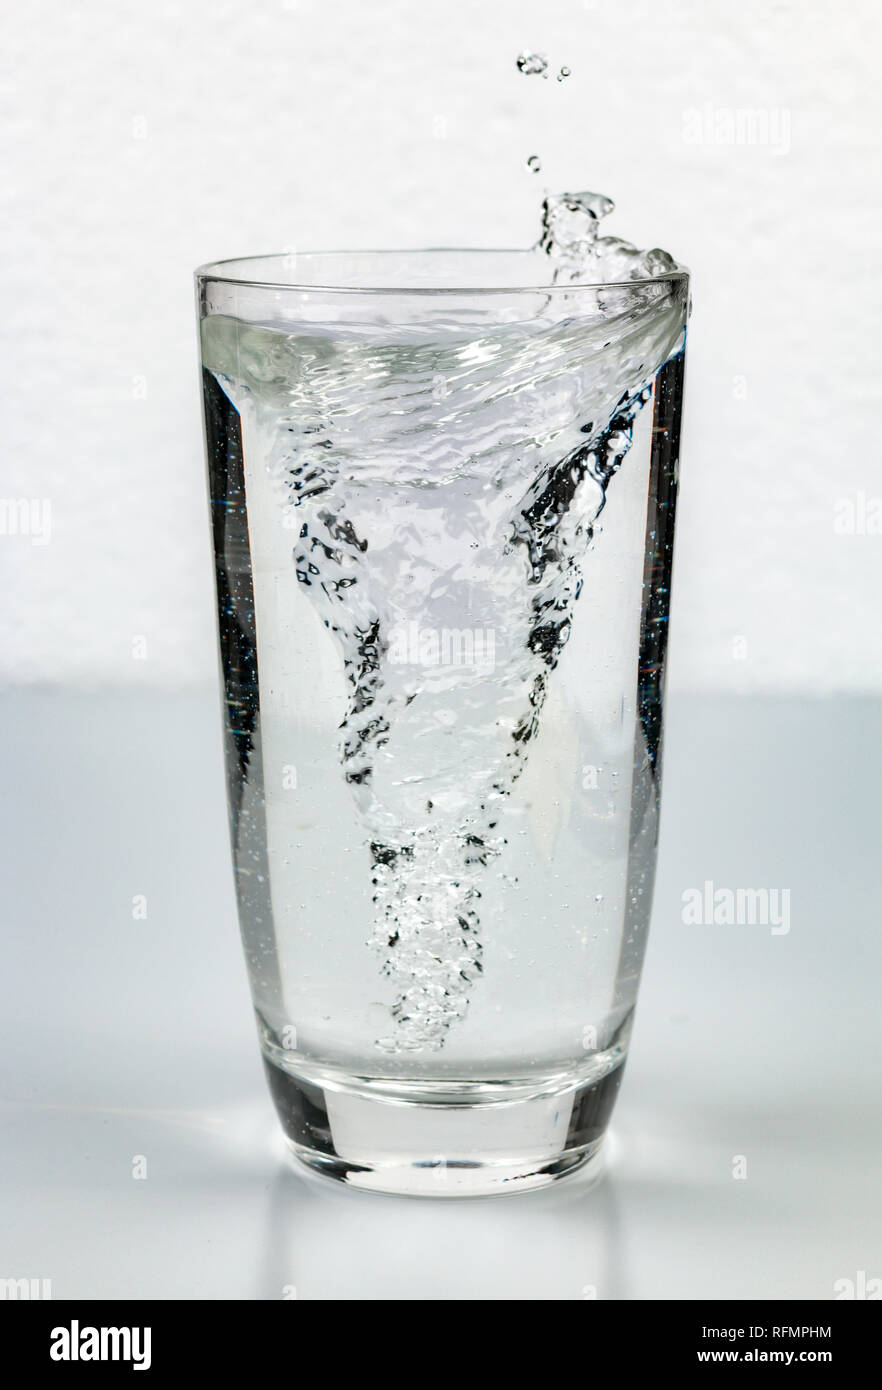 vortex whirlpool in glass of water Stock Photo